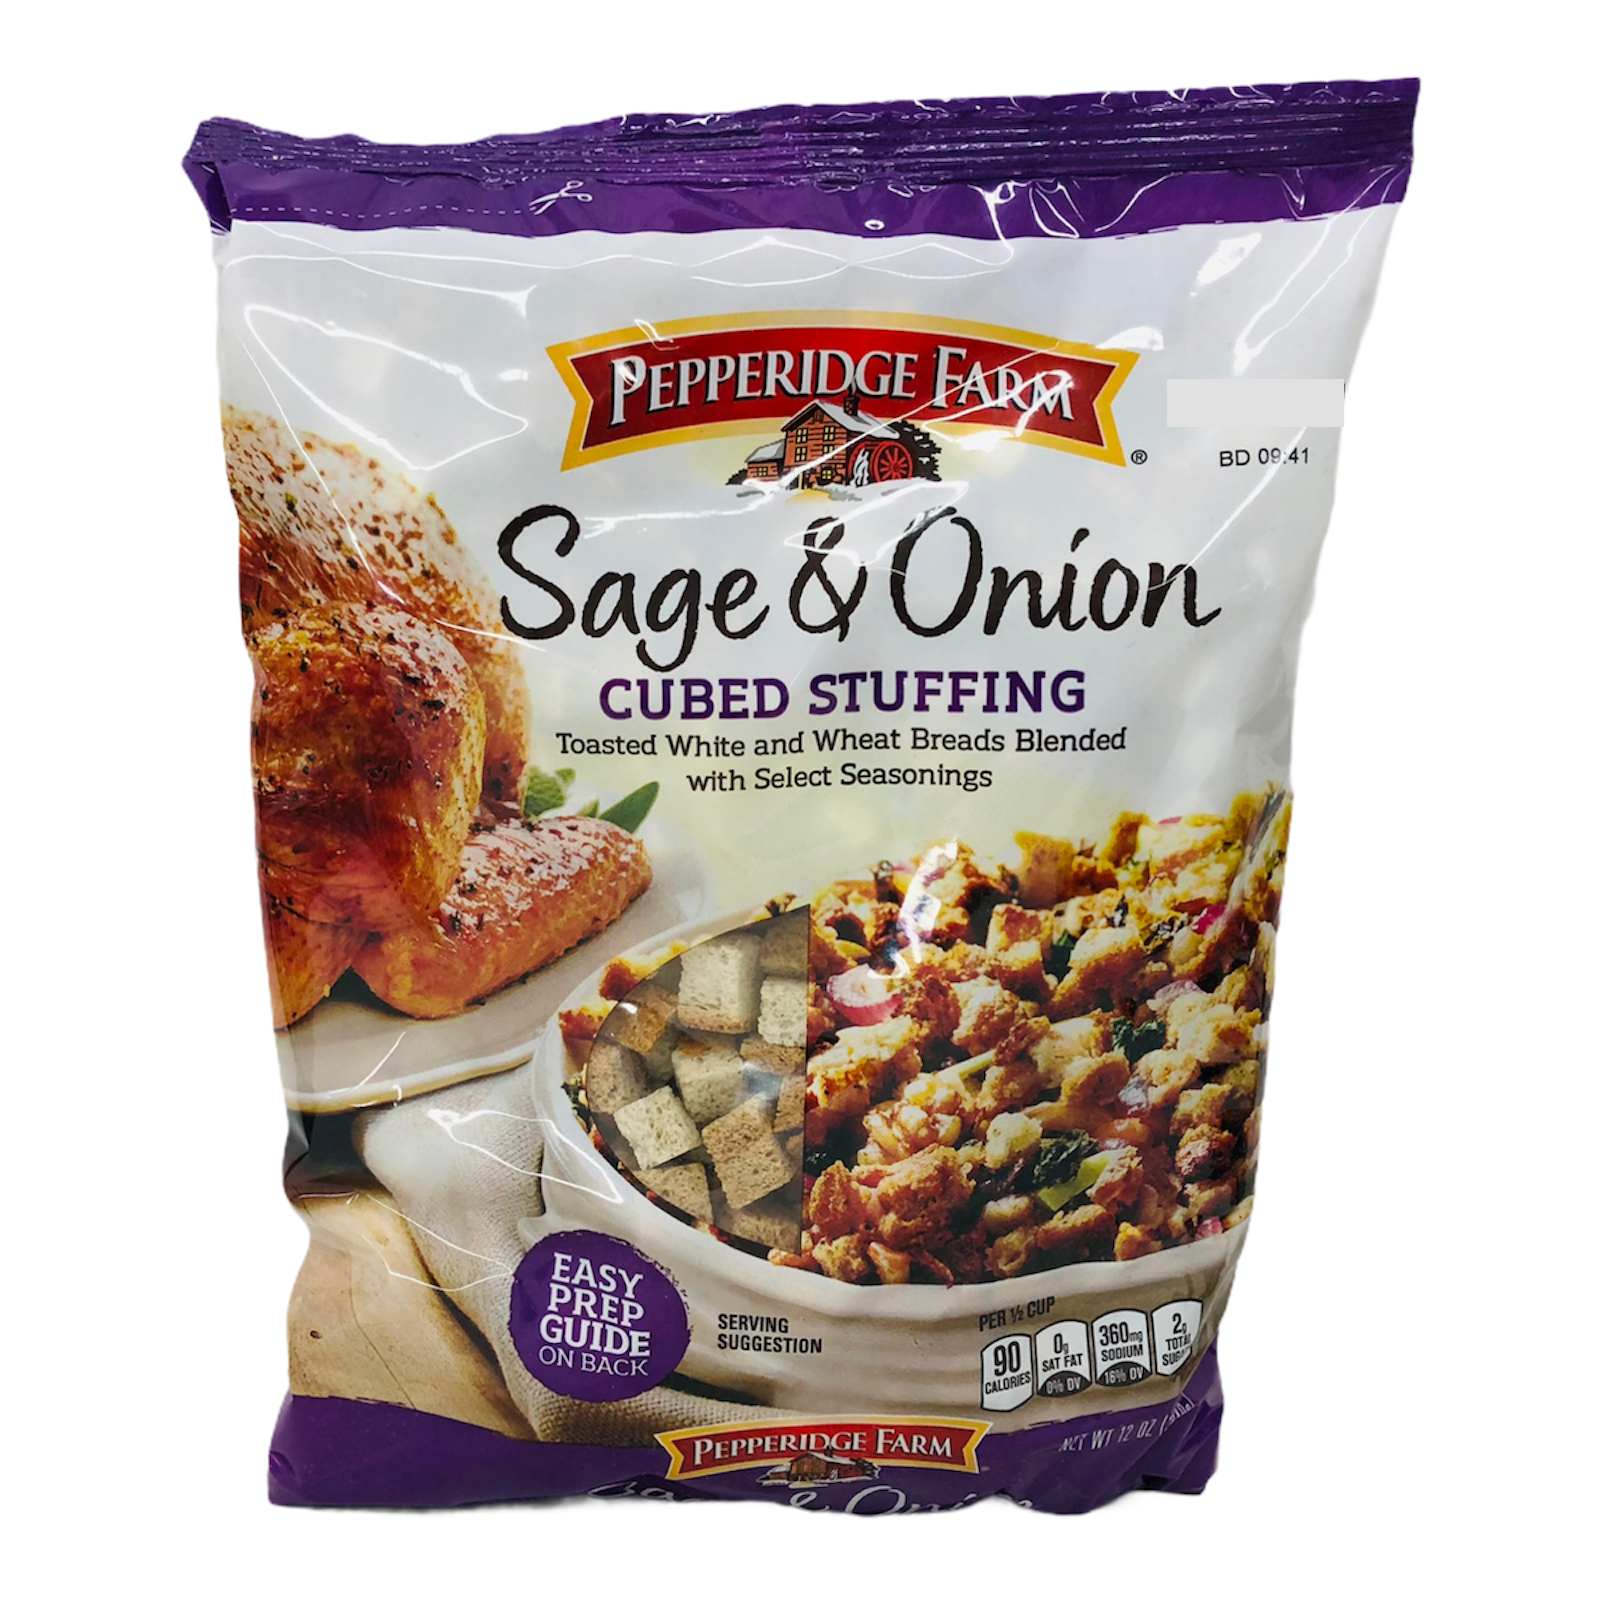 Pepperidge Farm Sage & Onion Cubed Stuffing 12 oz